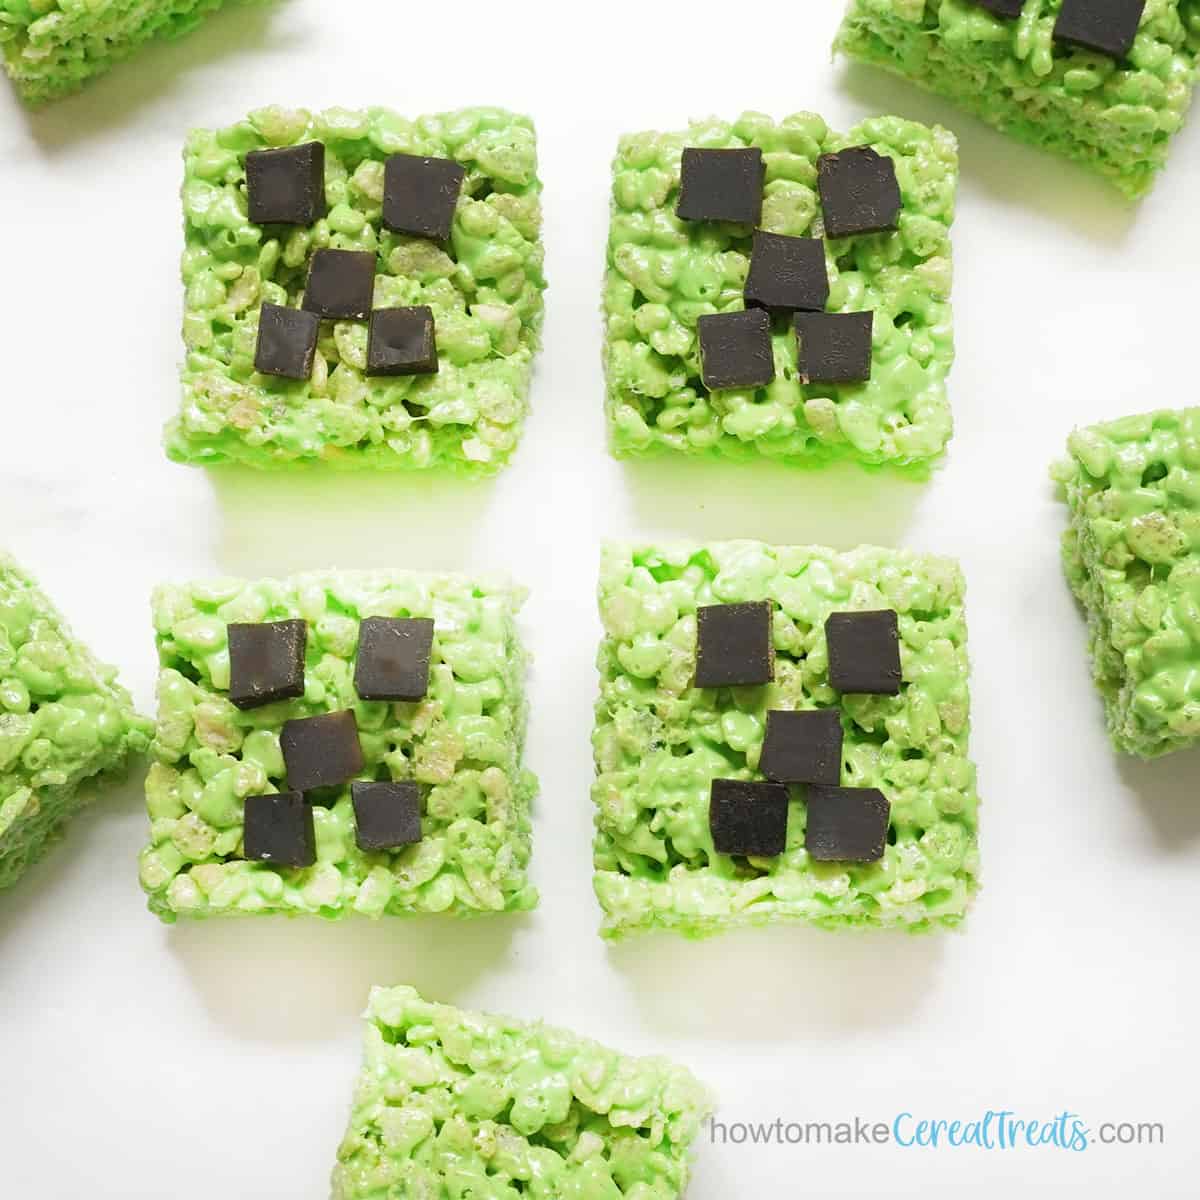 Kim's Cakes - Minecraft cake Cake, rice crispy treats and jello | Facebook